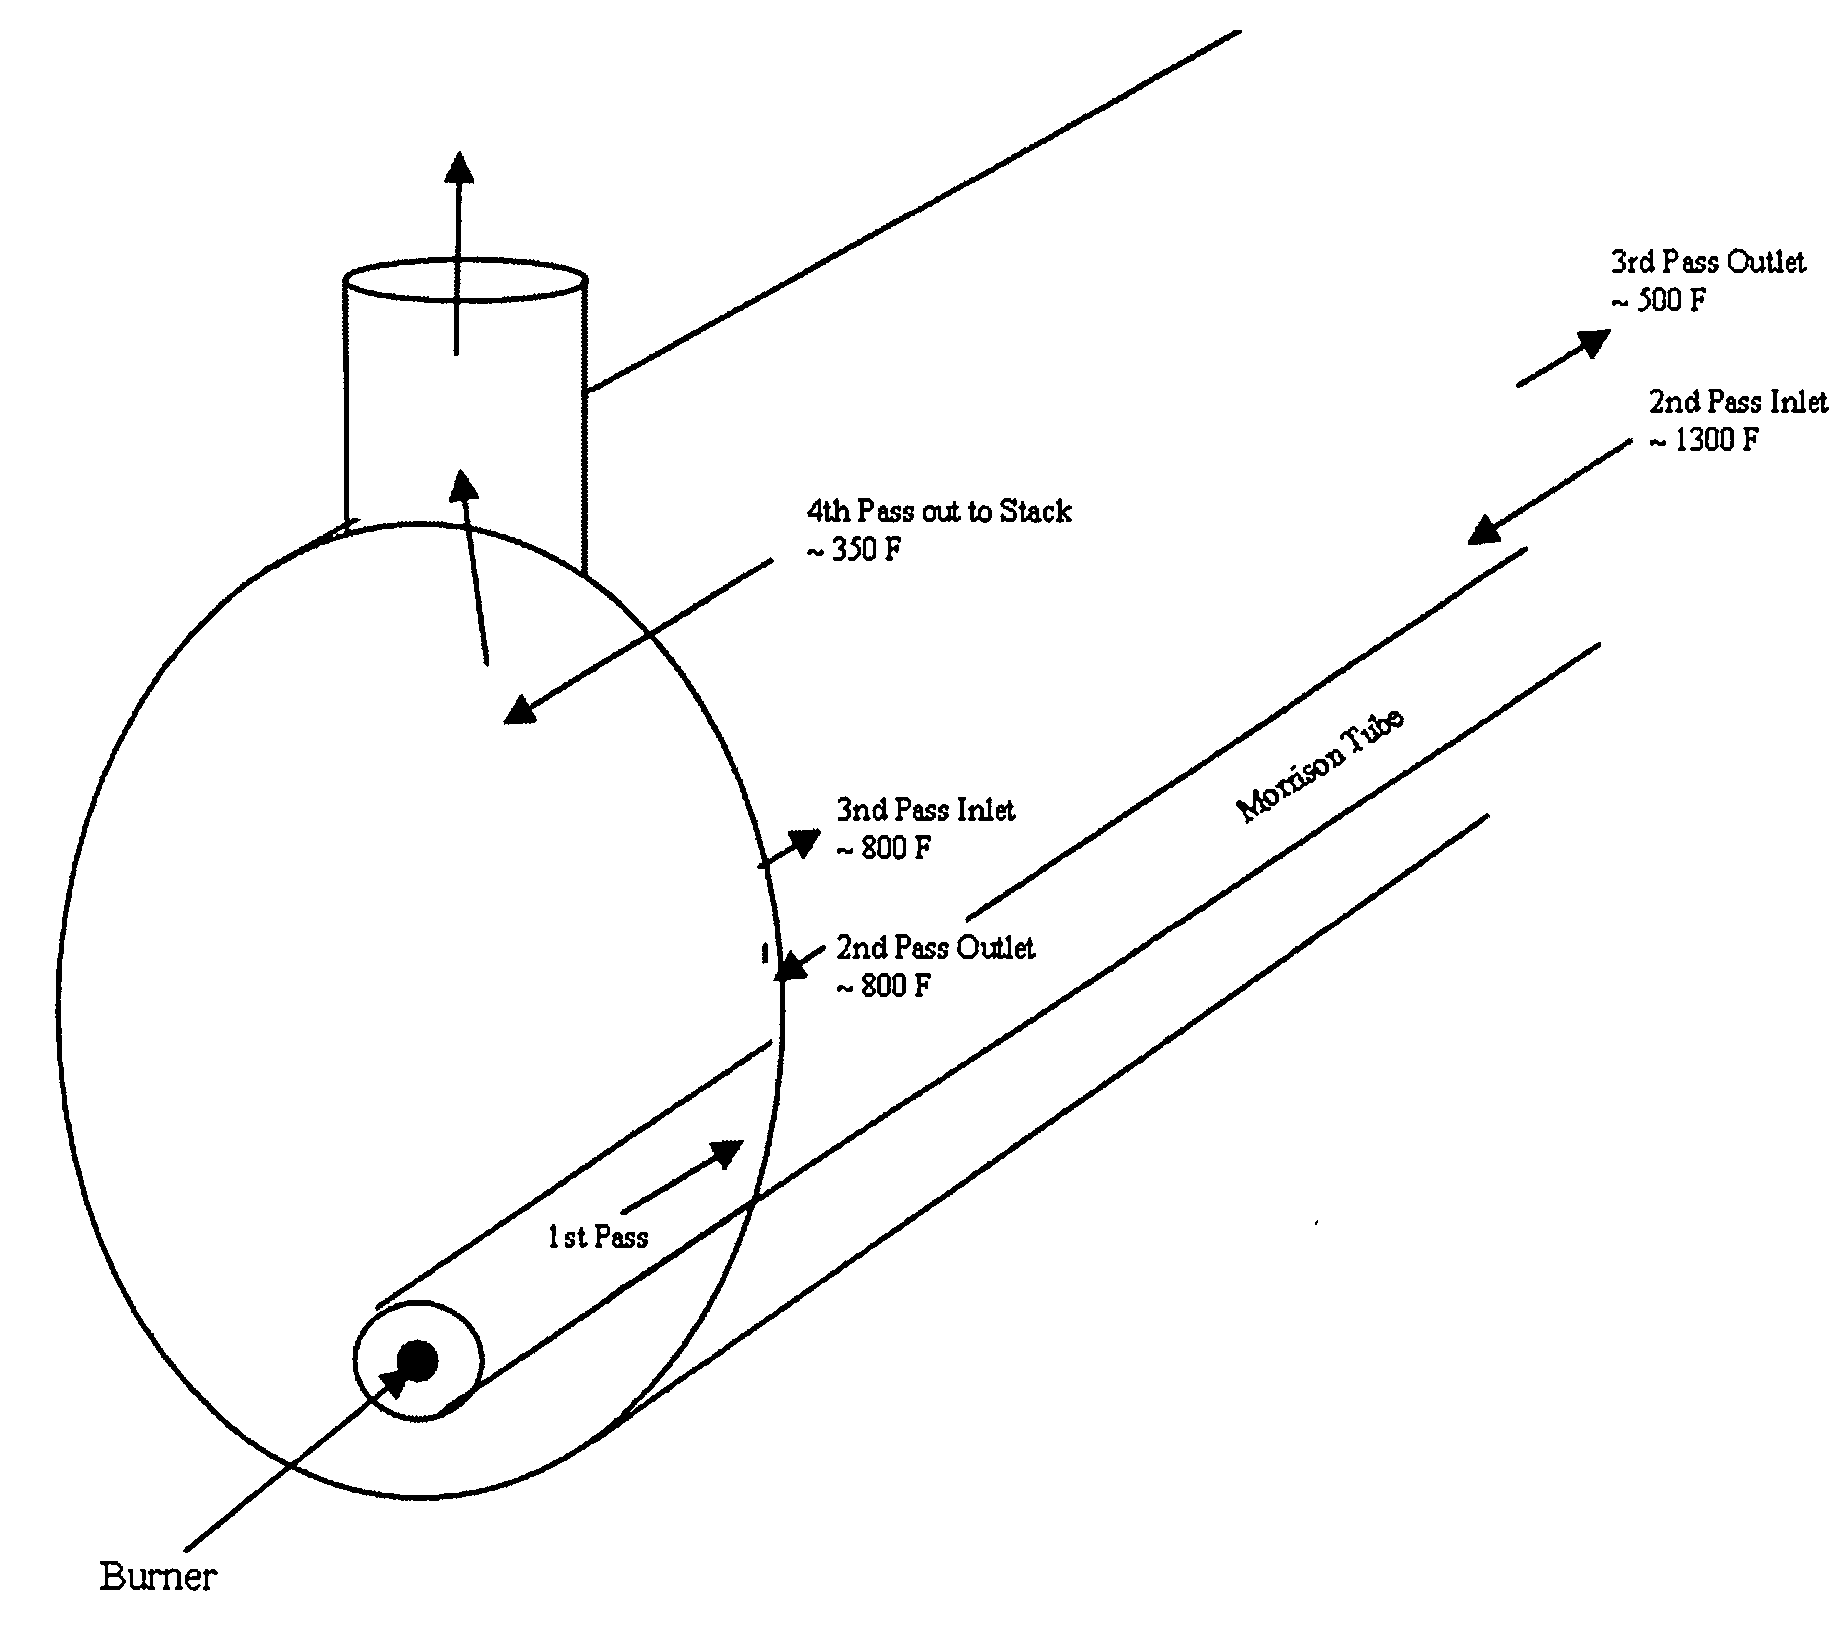 Emission control system internal to a boiler